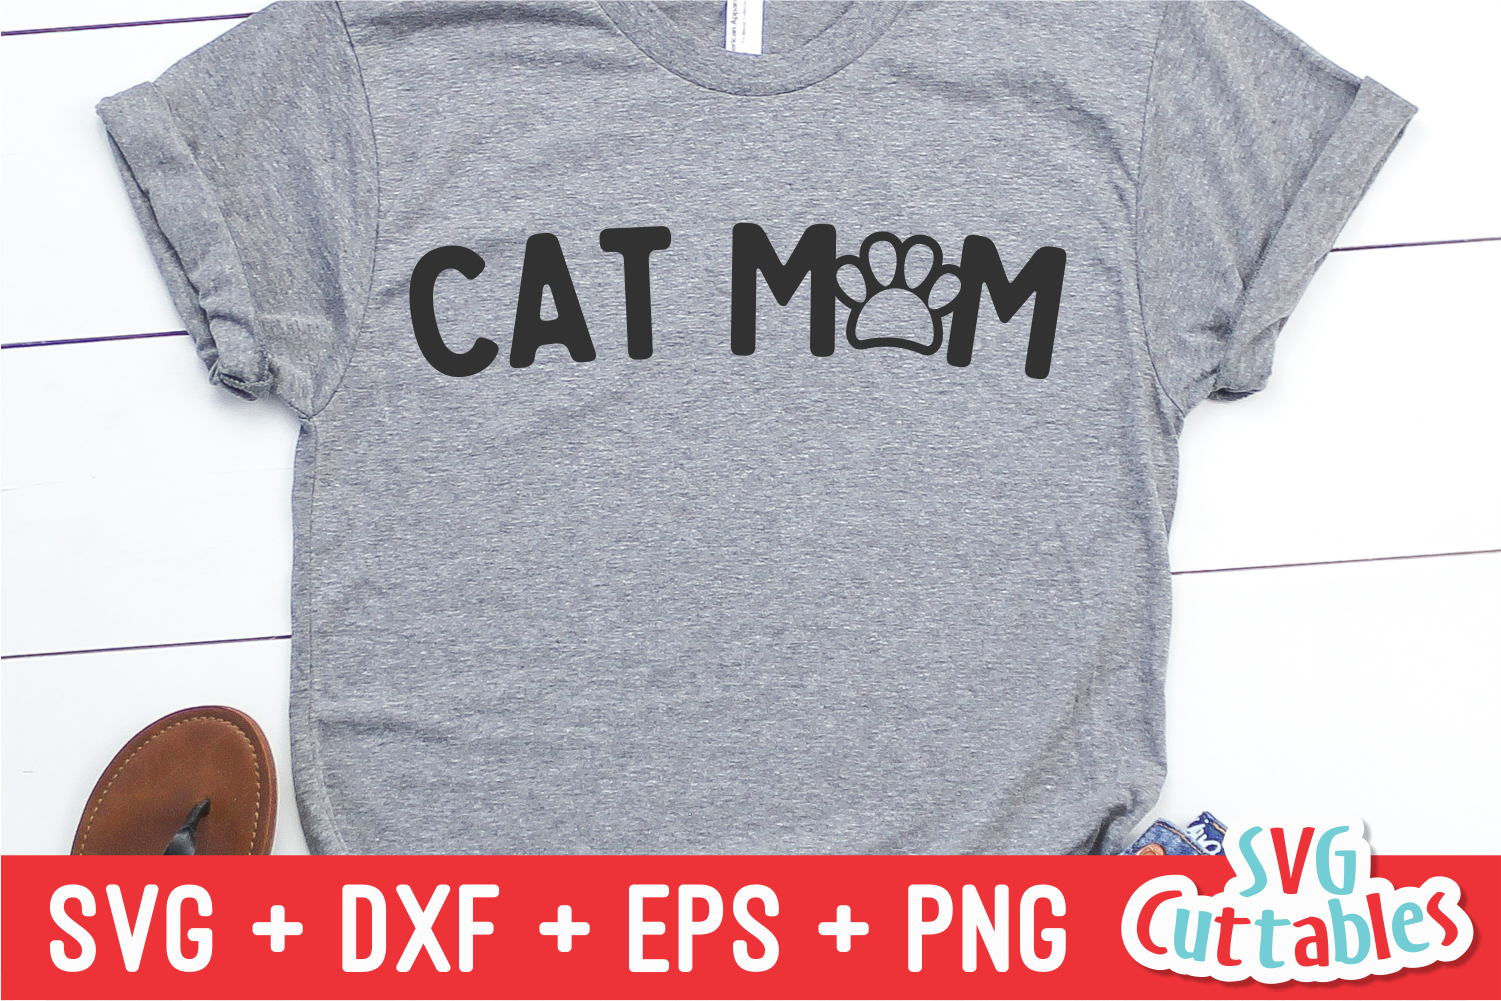 Download Cat Mom | SVG Cut File (283816) | Cut Files | Design Bundles